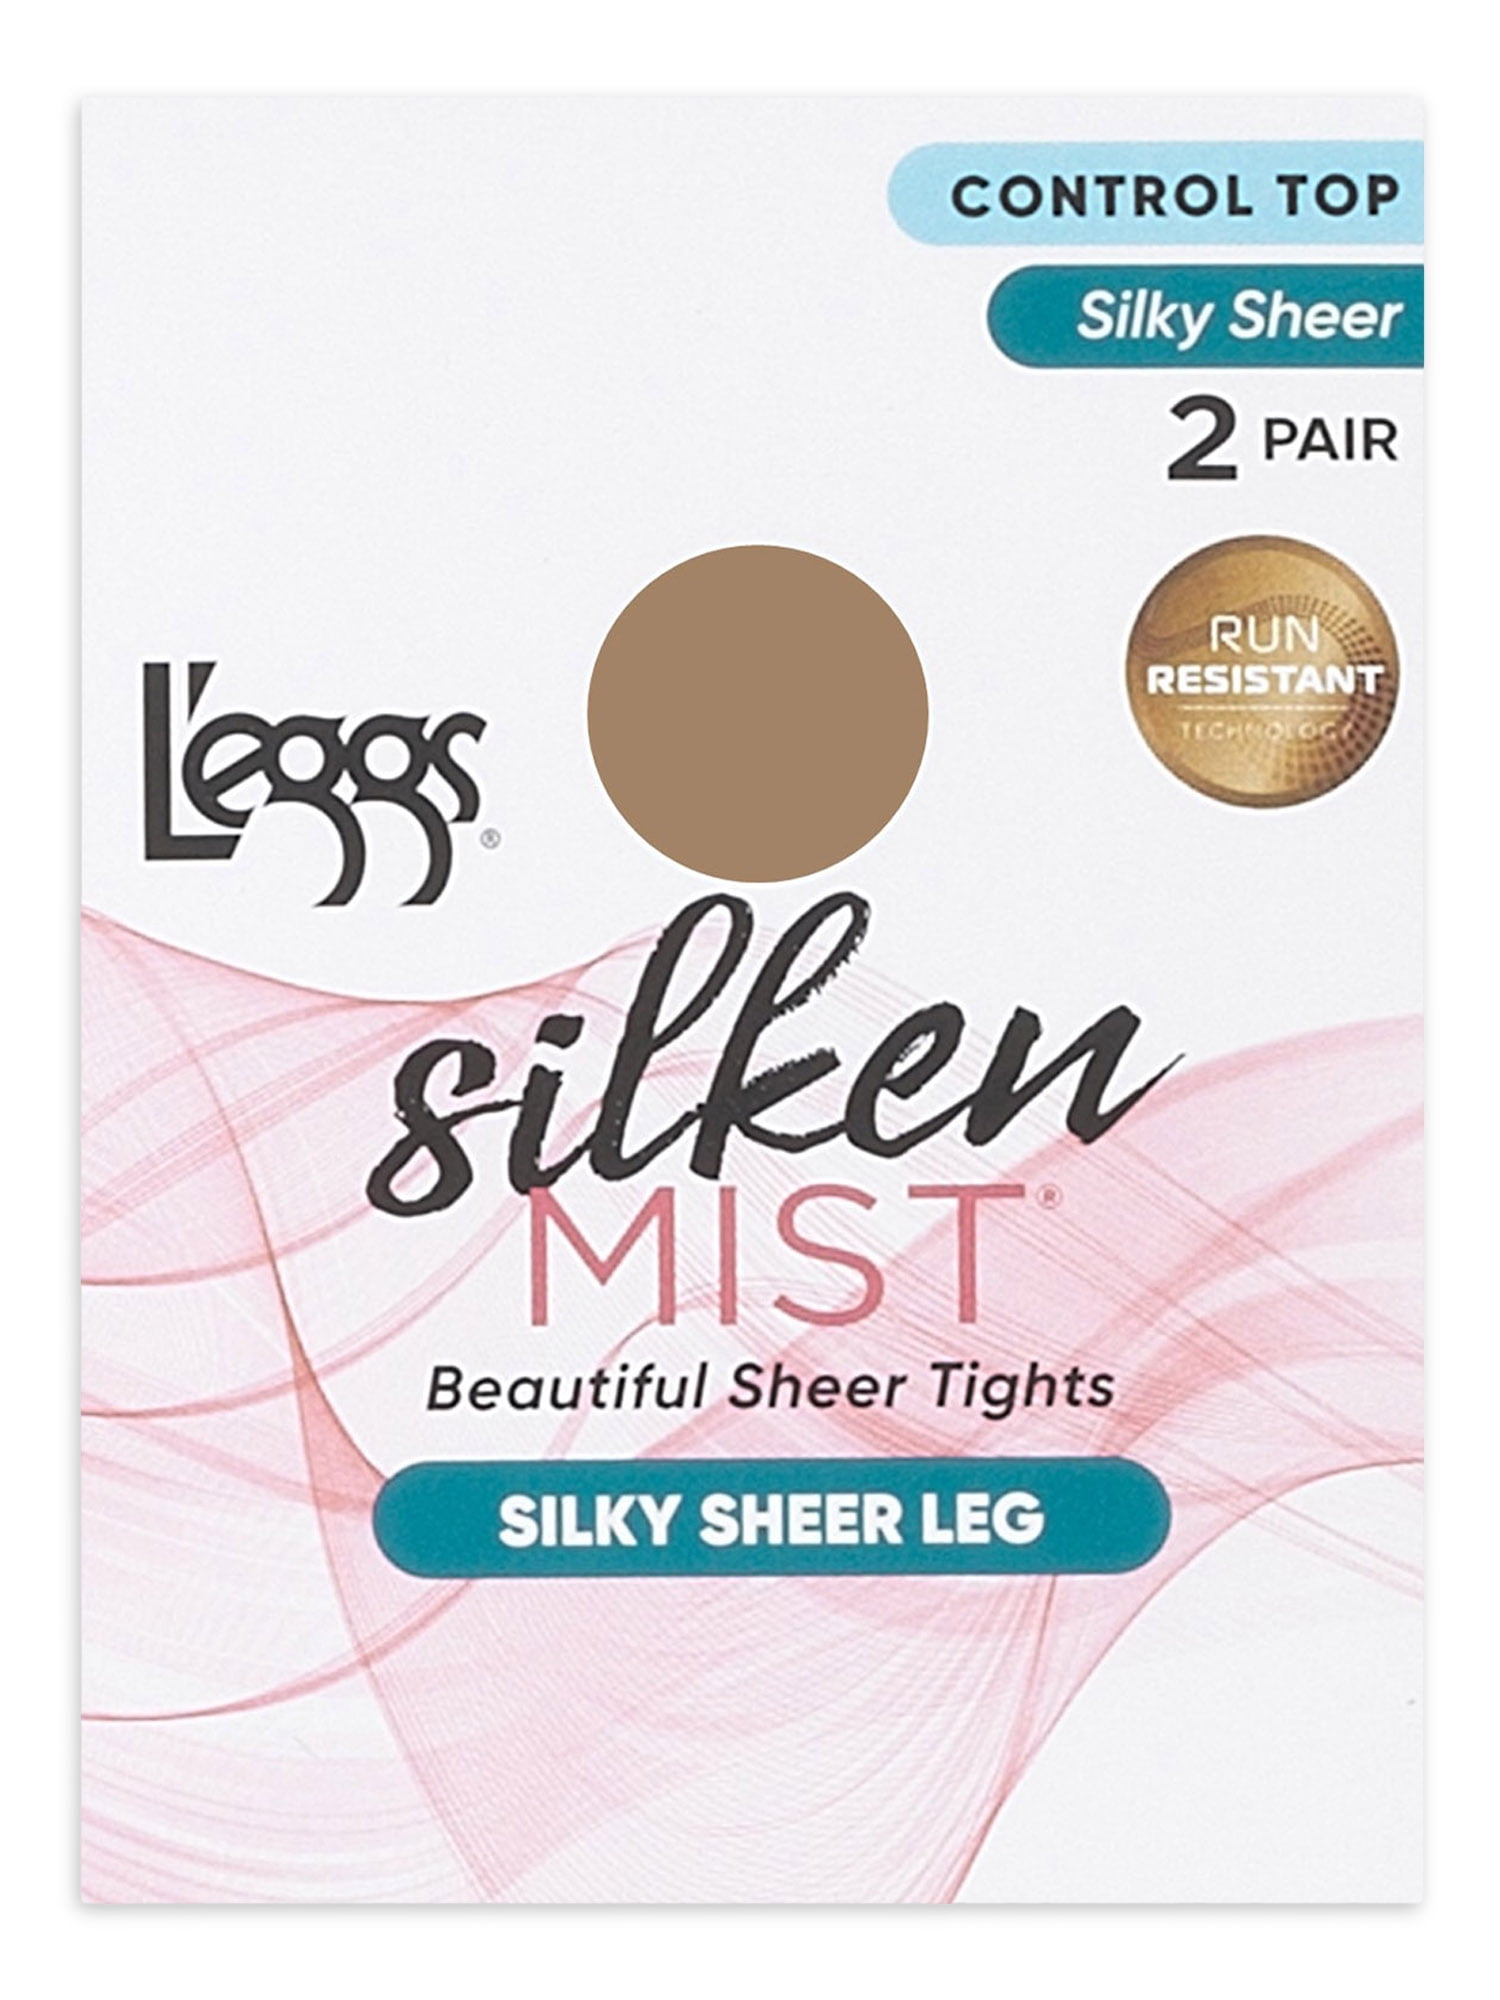 L'eggs Silken Mist Silky Sheer Leg Control Top Run Resistant Sheer